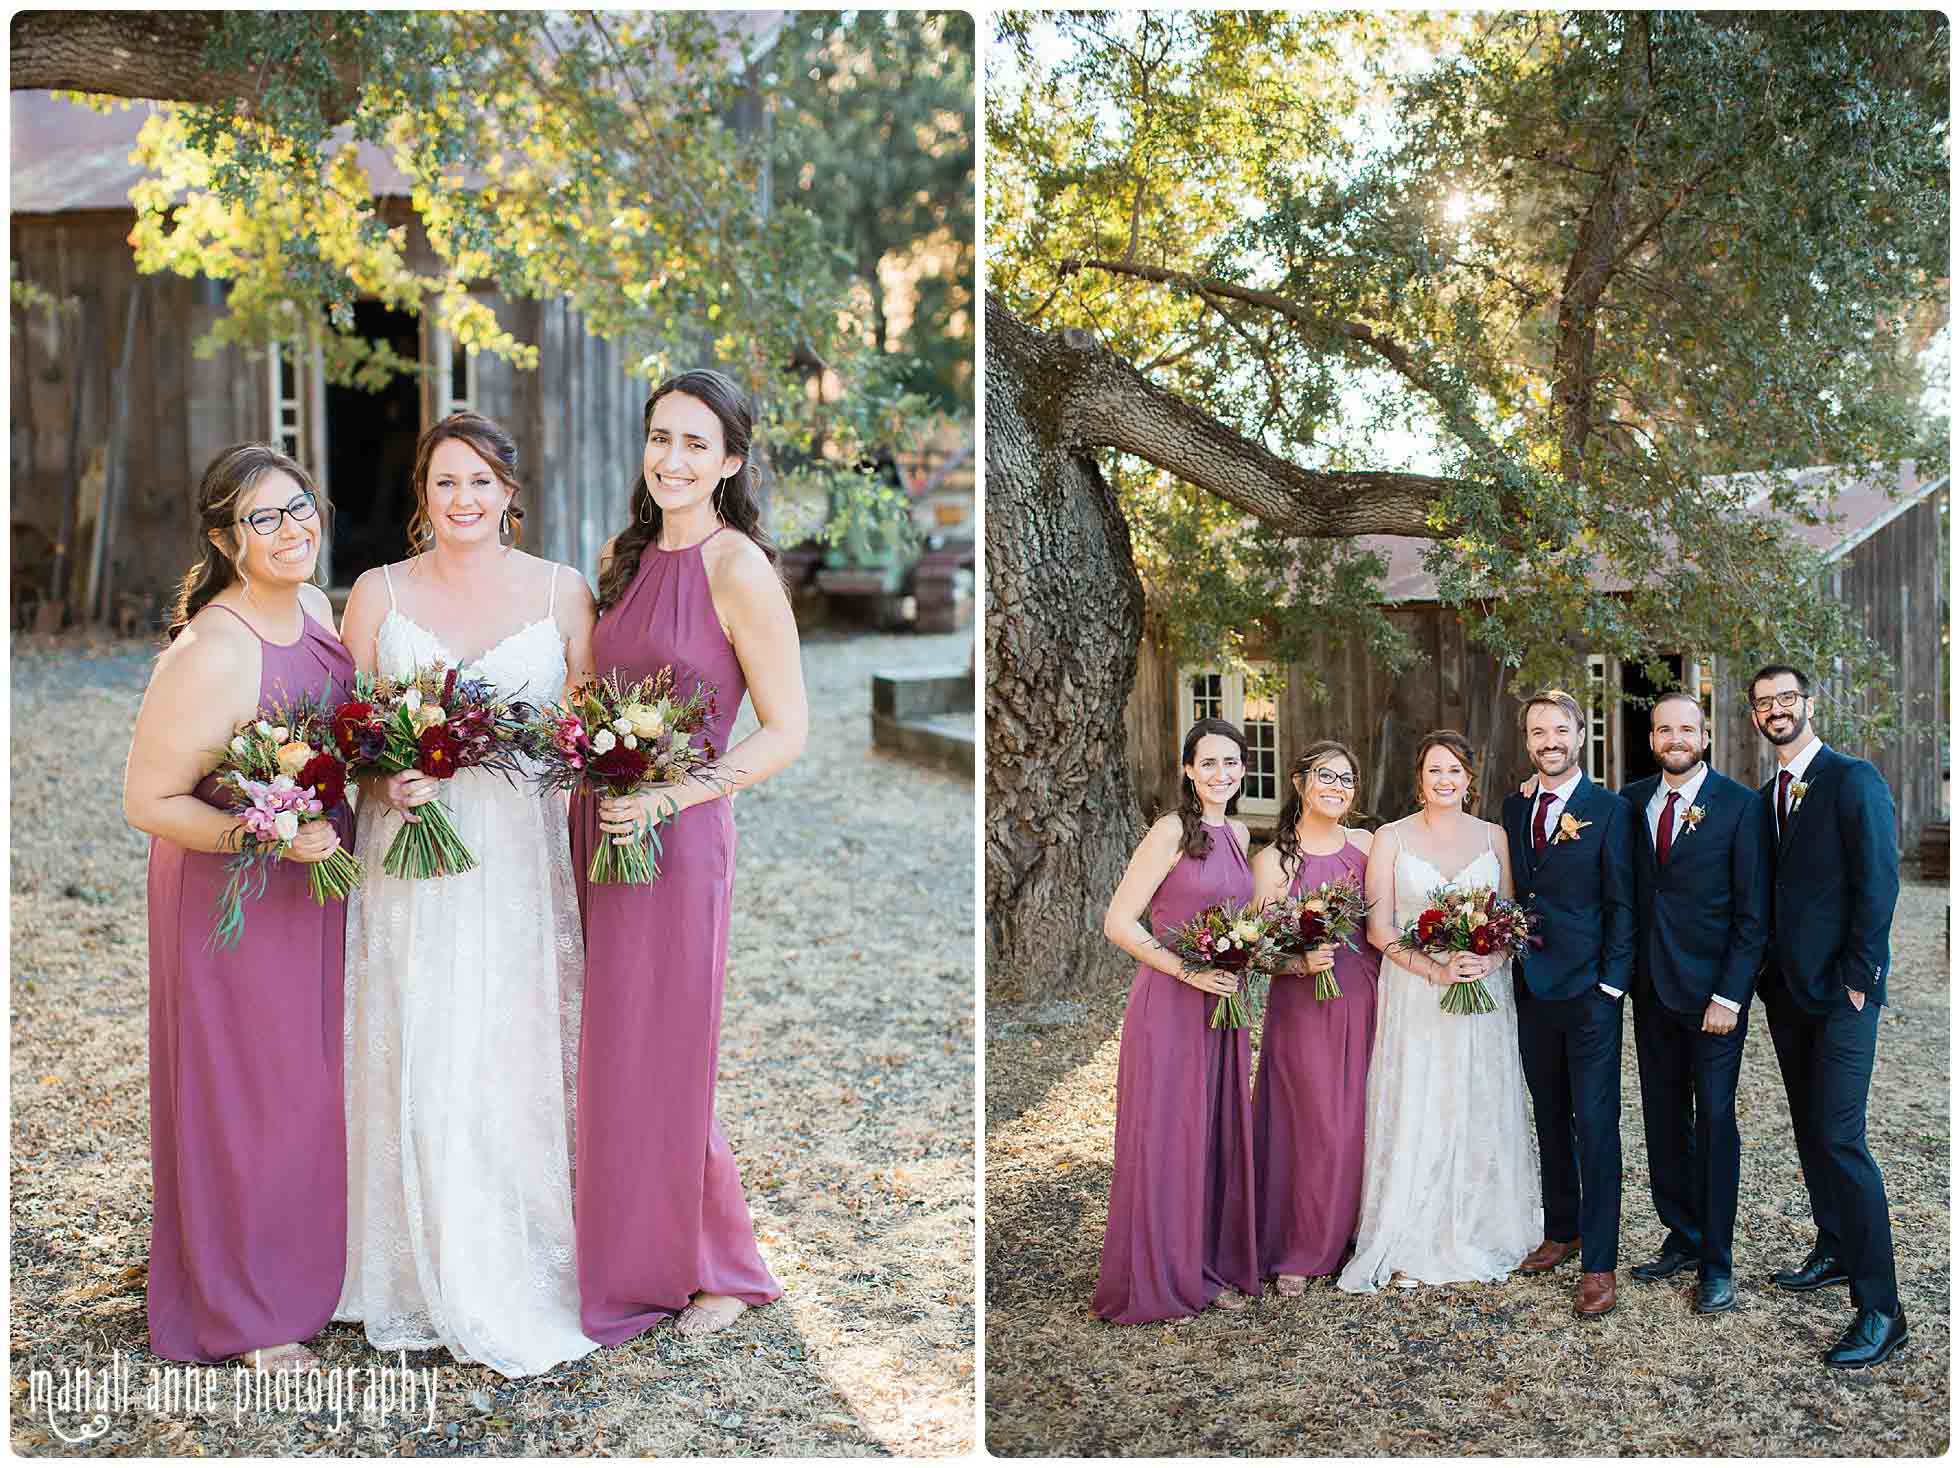 Reinstein Ranch Livermore Wedding, Bay Area Wedding Photos, East Bay Wedding Locations, Bridal Party Photos